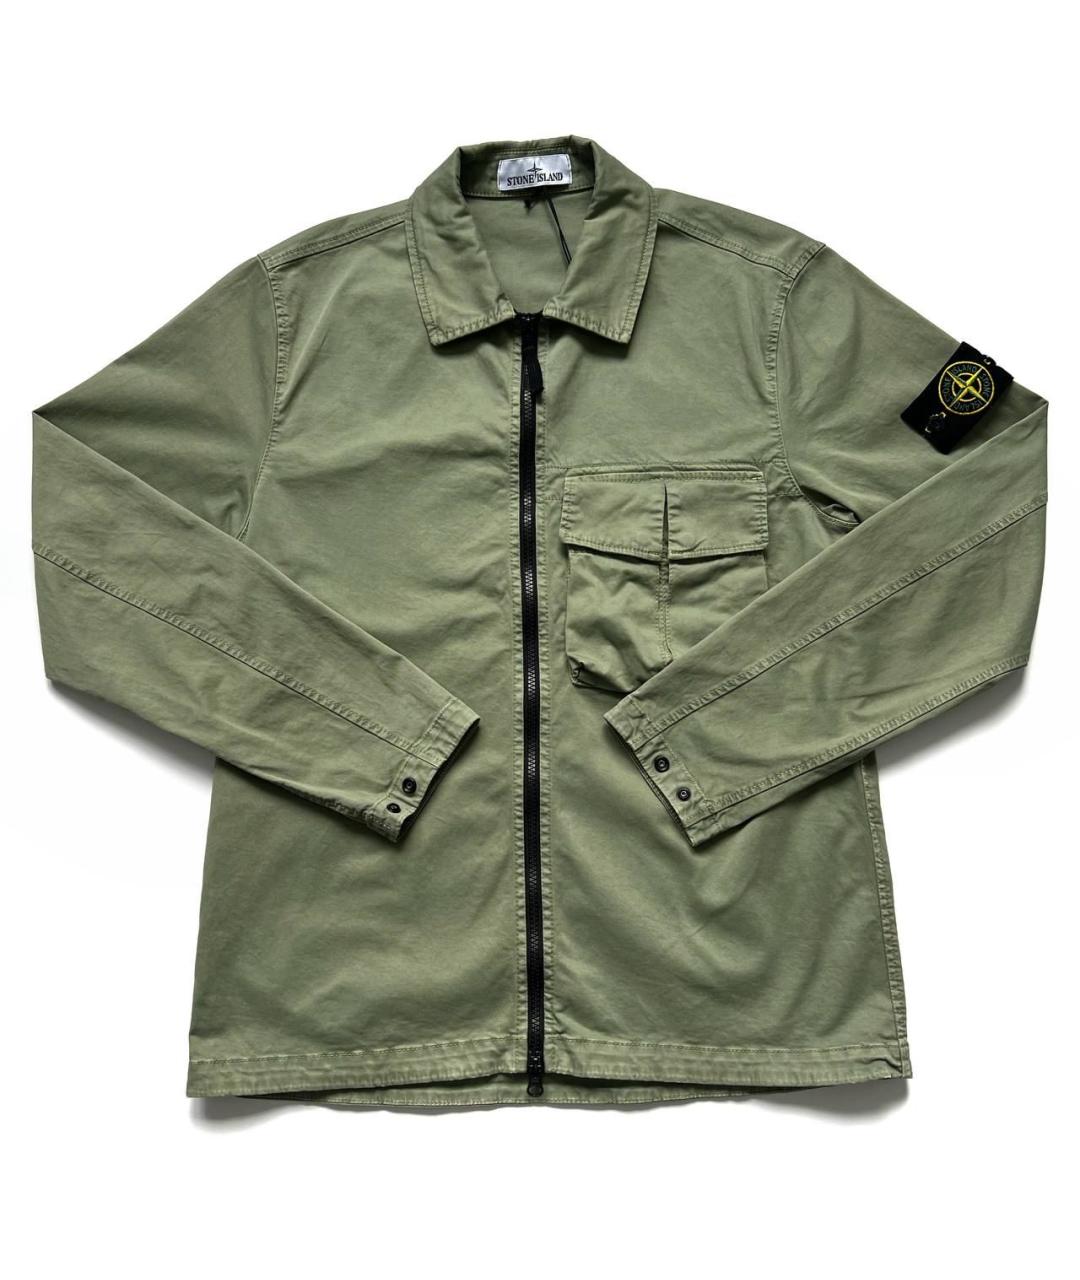 Куртки STONE ISLAND для мужчин купить за 43000 руб, арт. 1250617 –  Интернет-магазин Oskelly